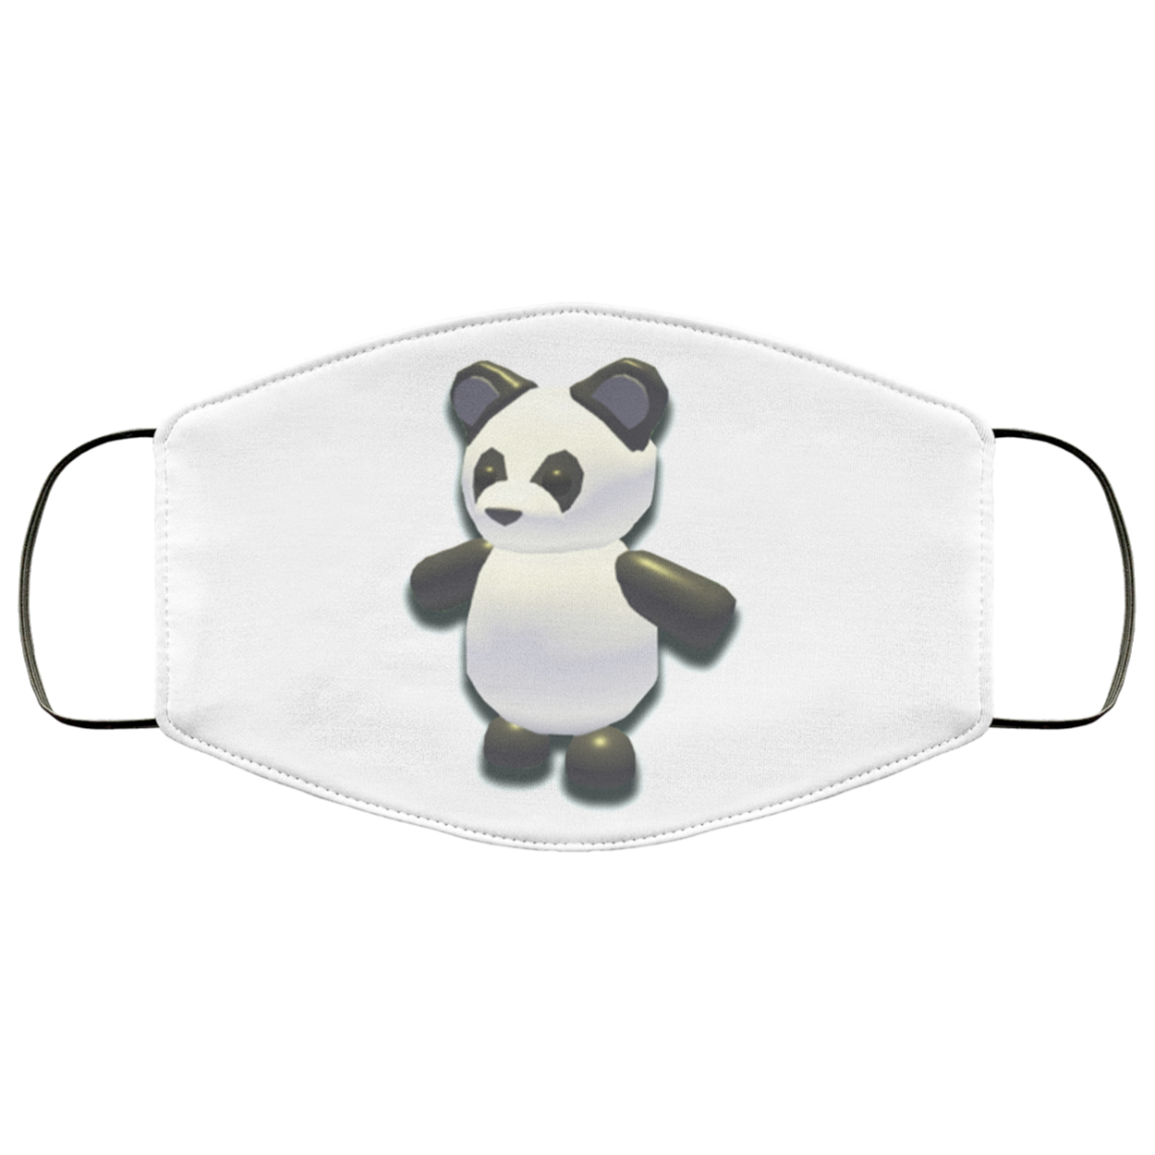 Panda Adopt Me Roblox Roblox Game Adopt Me Characters Face Mask Q Finder Trending Design T Shirt - panda knit roblox